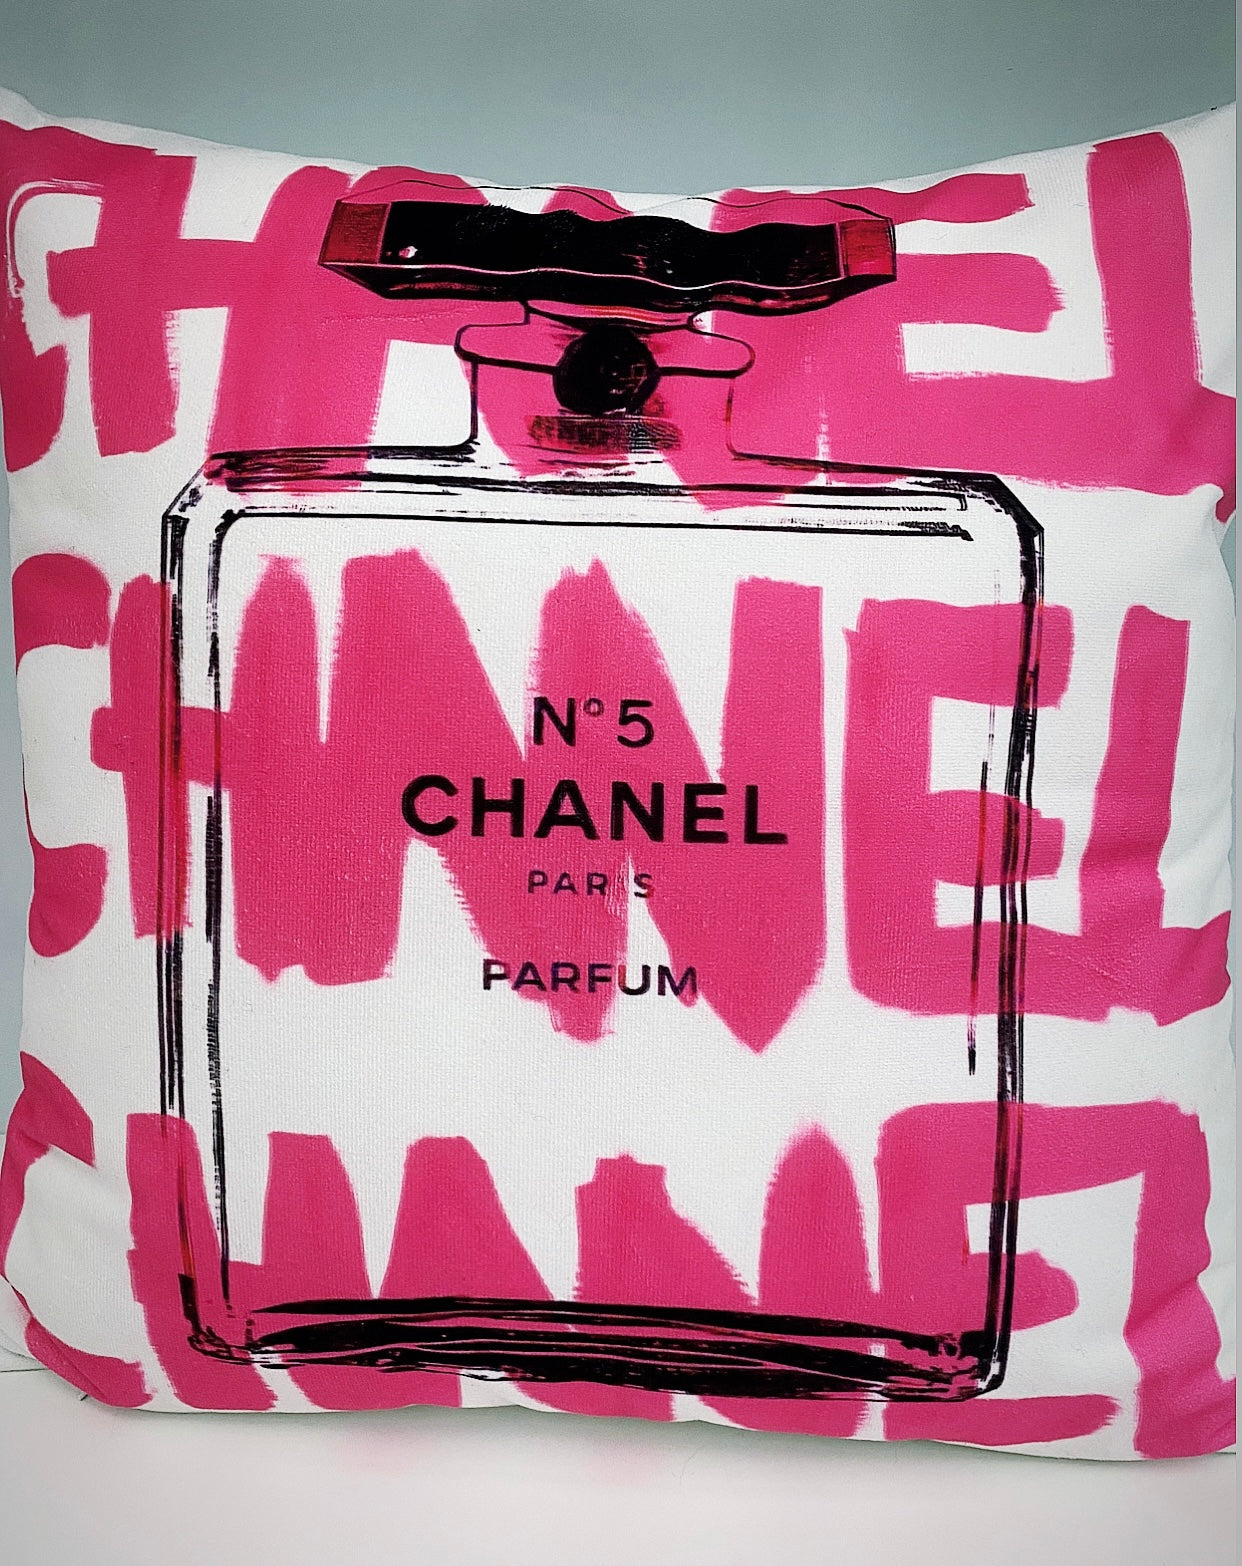 Chanel High Heel Shoe And No.5 Sunflower Perfume Bottle In White background  Blanket - Kaiteez